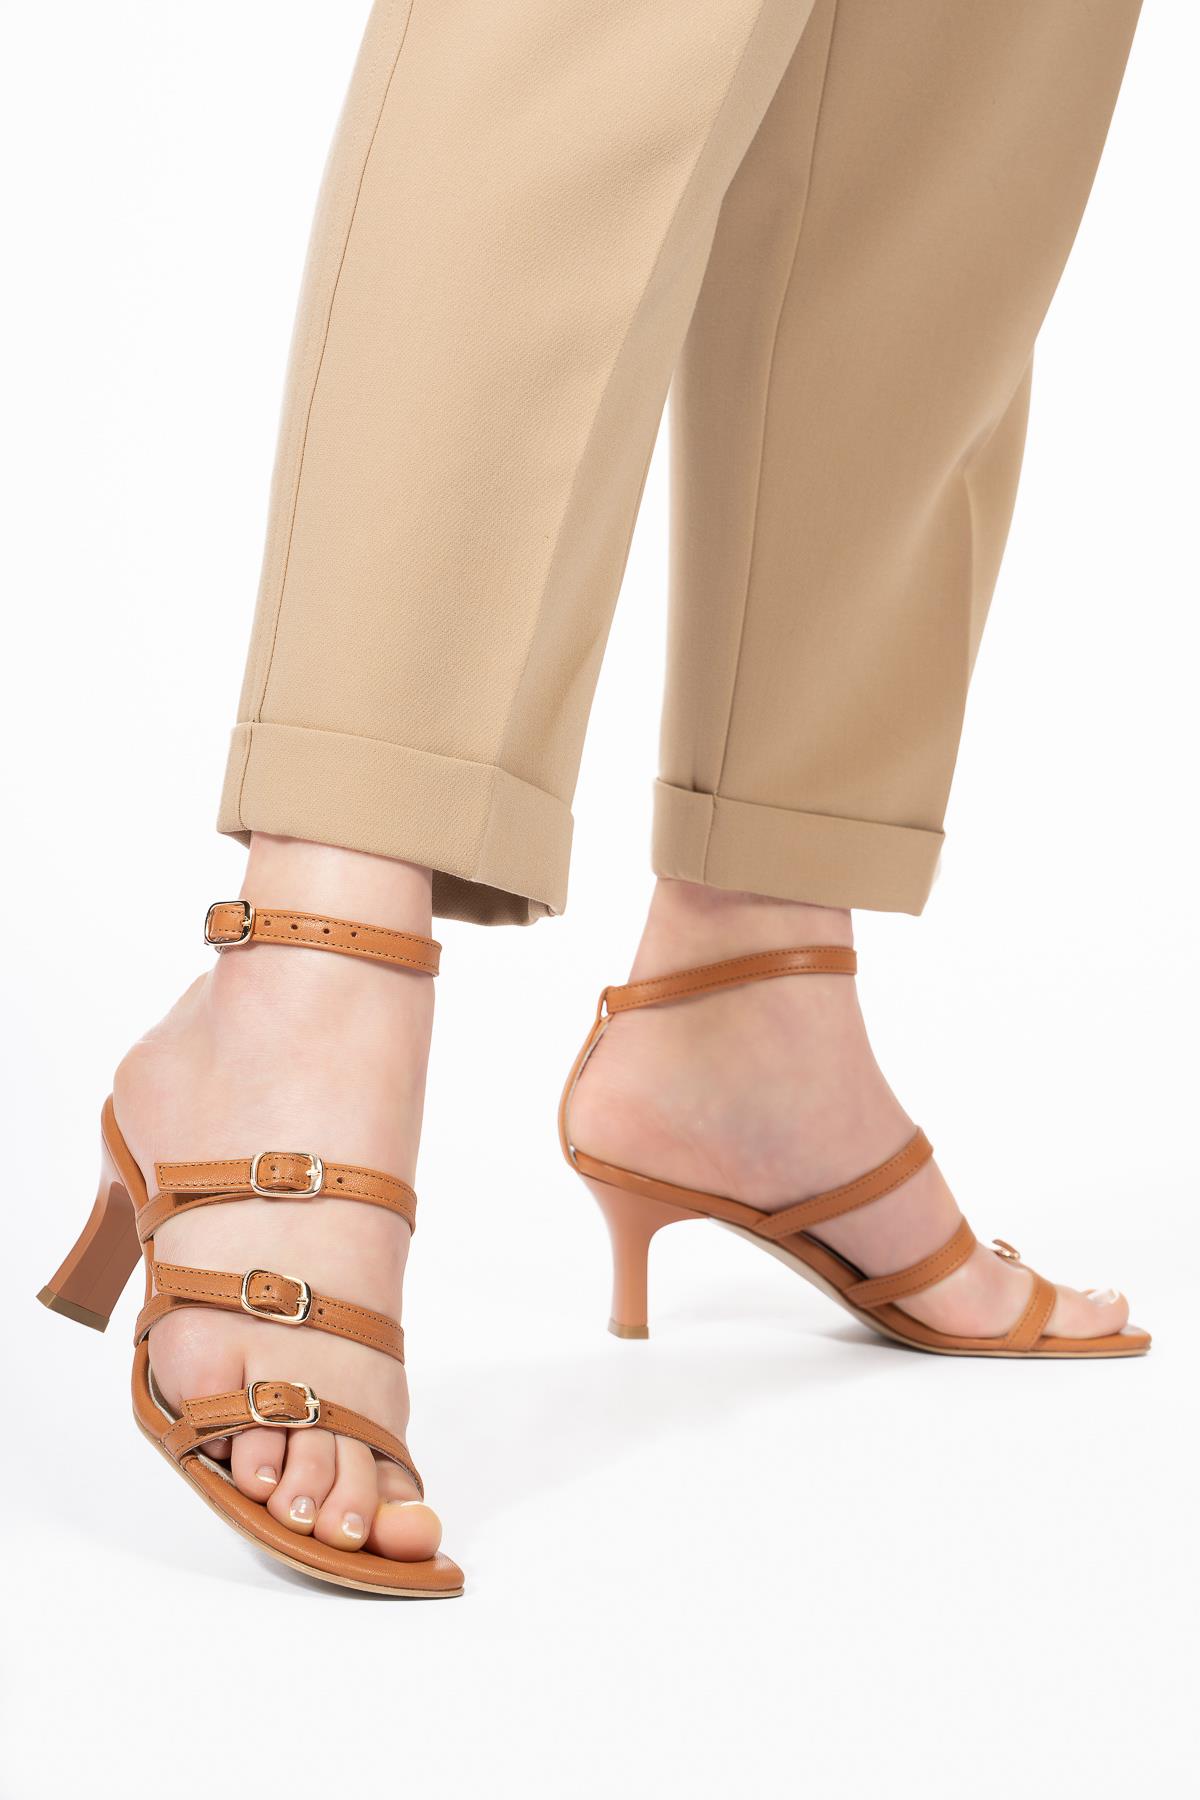 Women's Genuine Leather Sandals